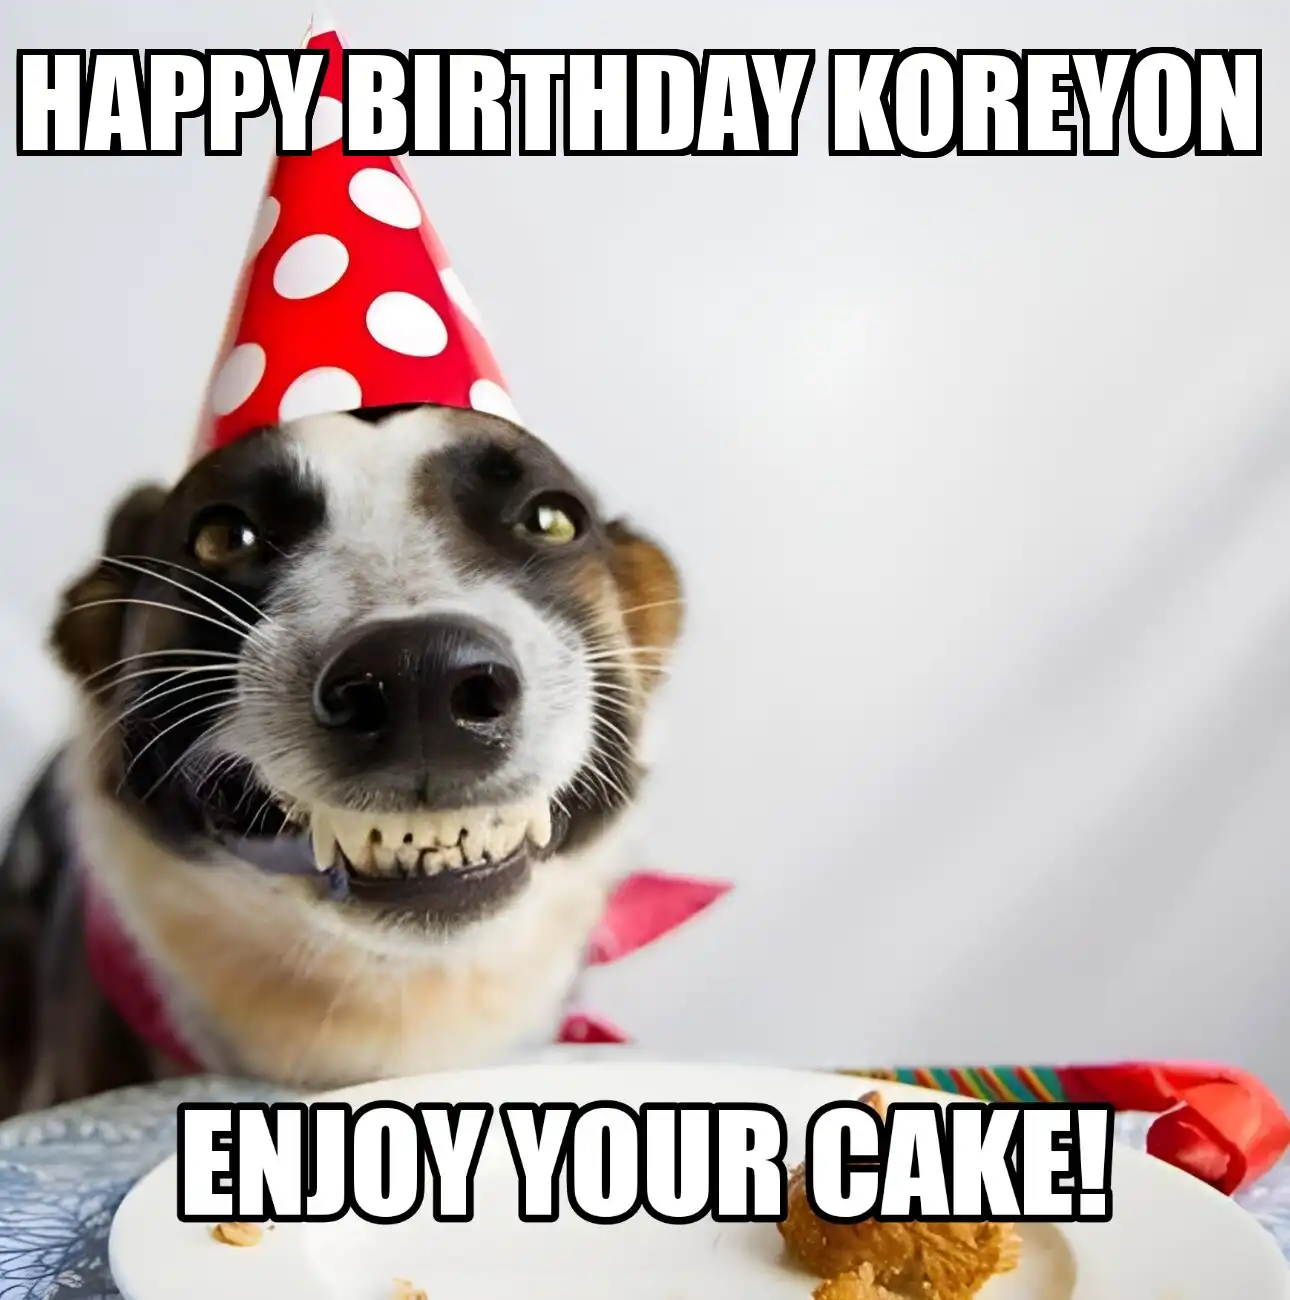 Happy Birthday Koreyon Enjoy Your Cake Dog Meme